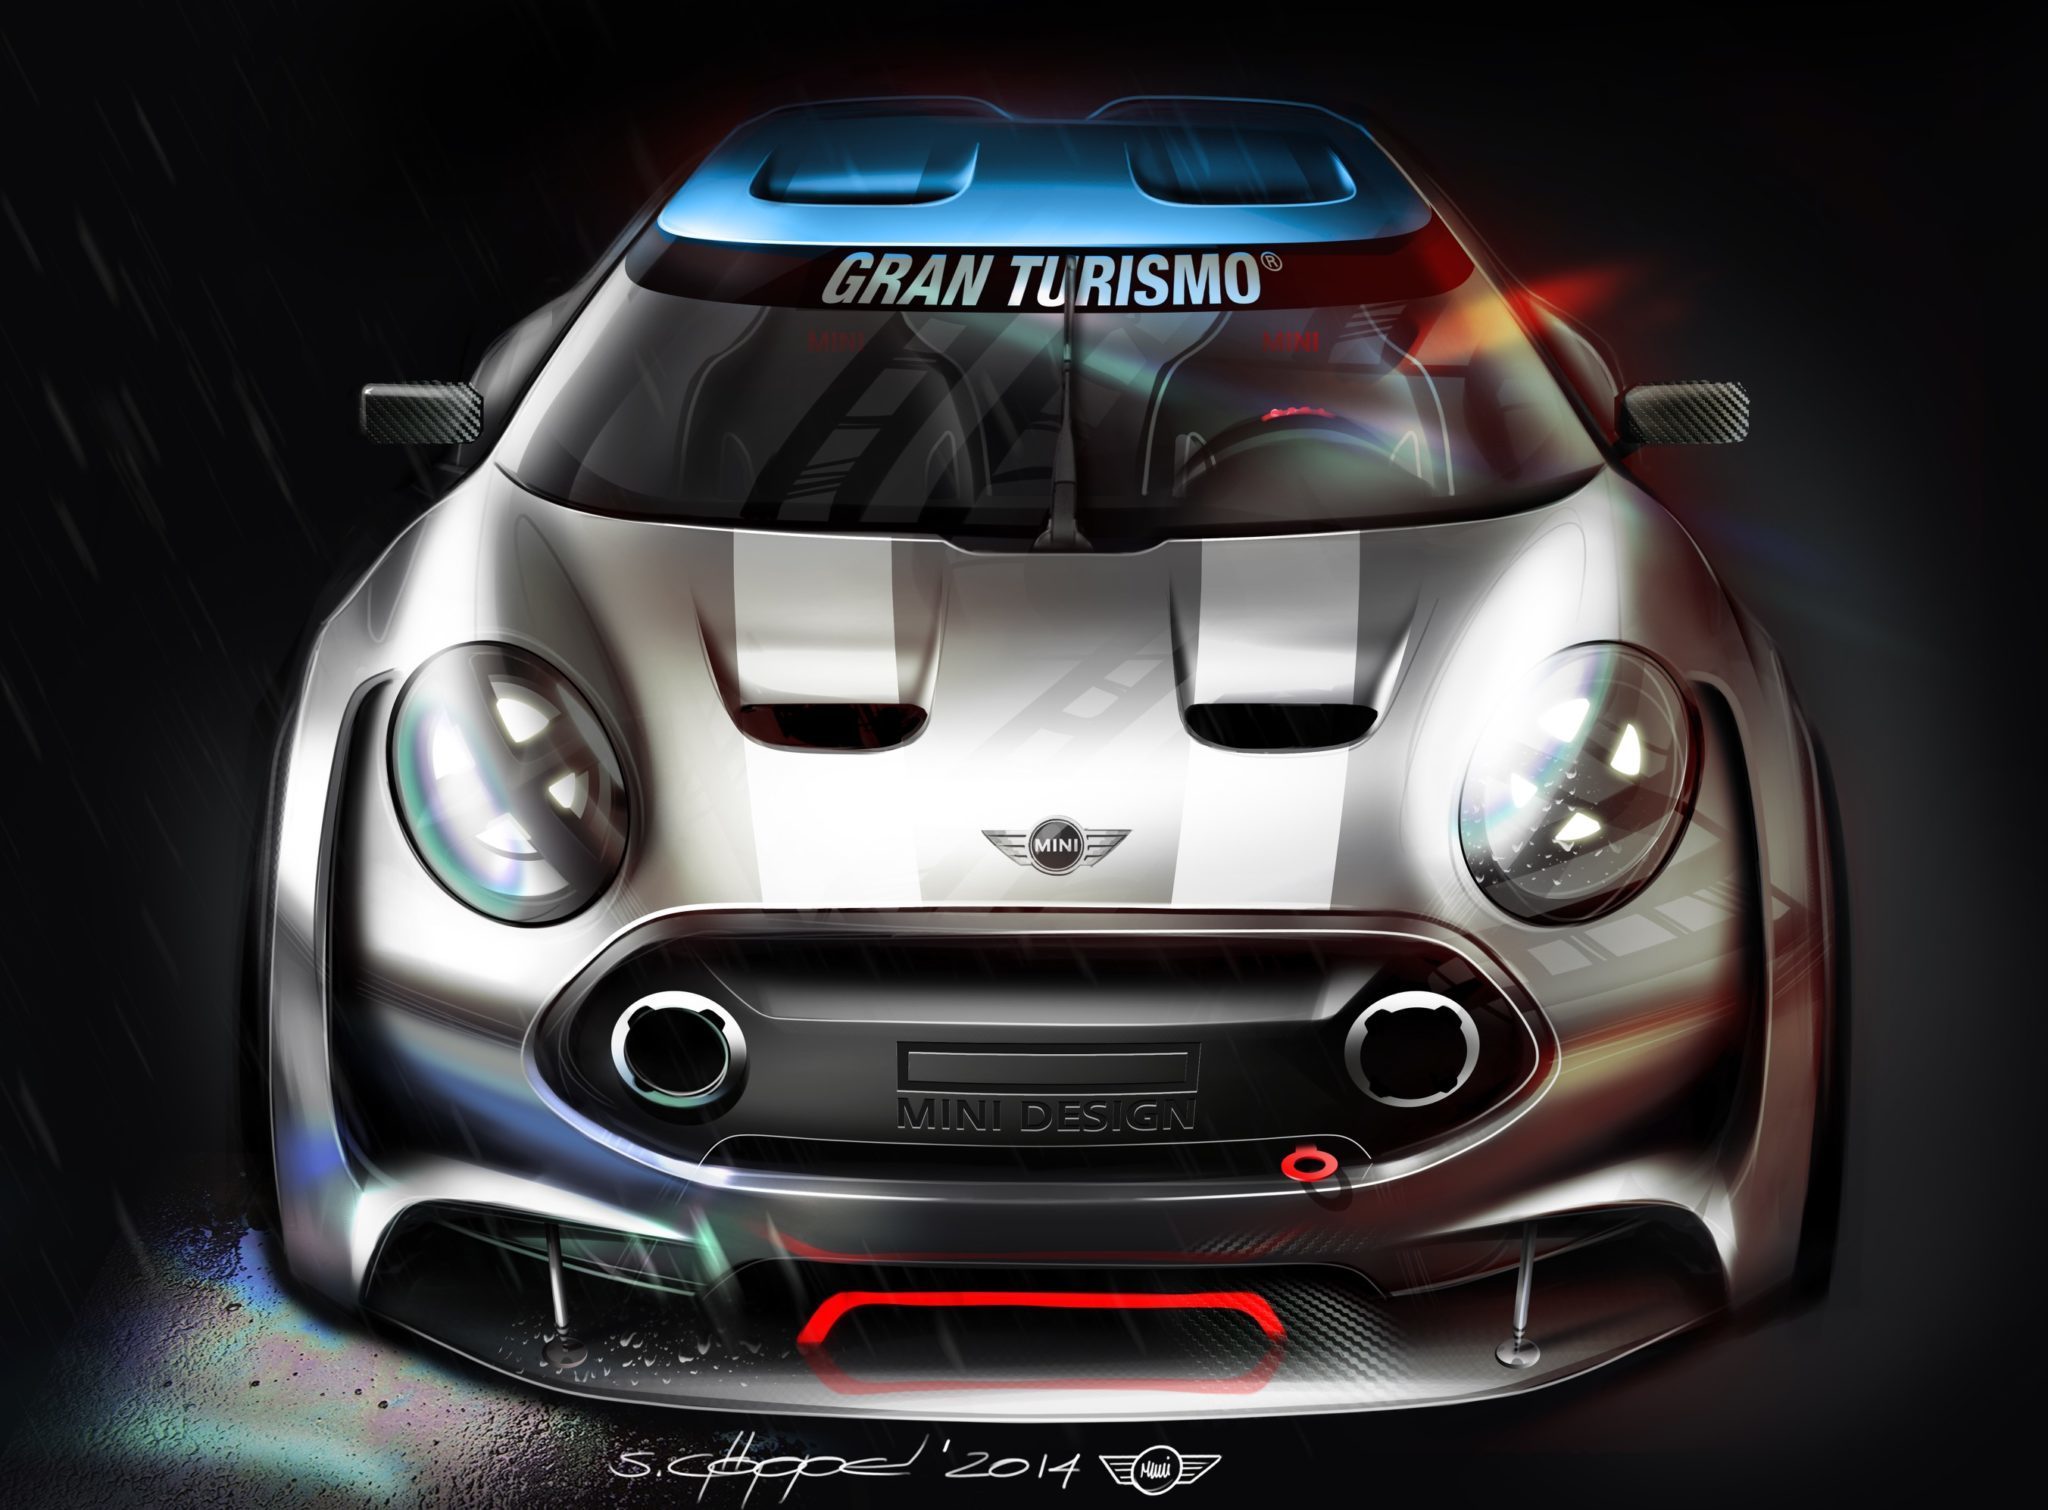 Gran Turismo Concept - The Cutting Room Floor